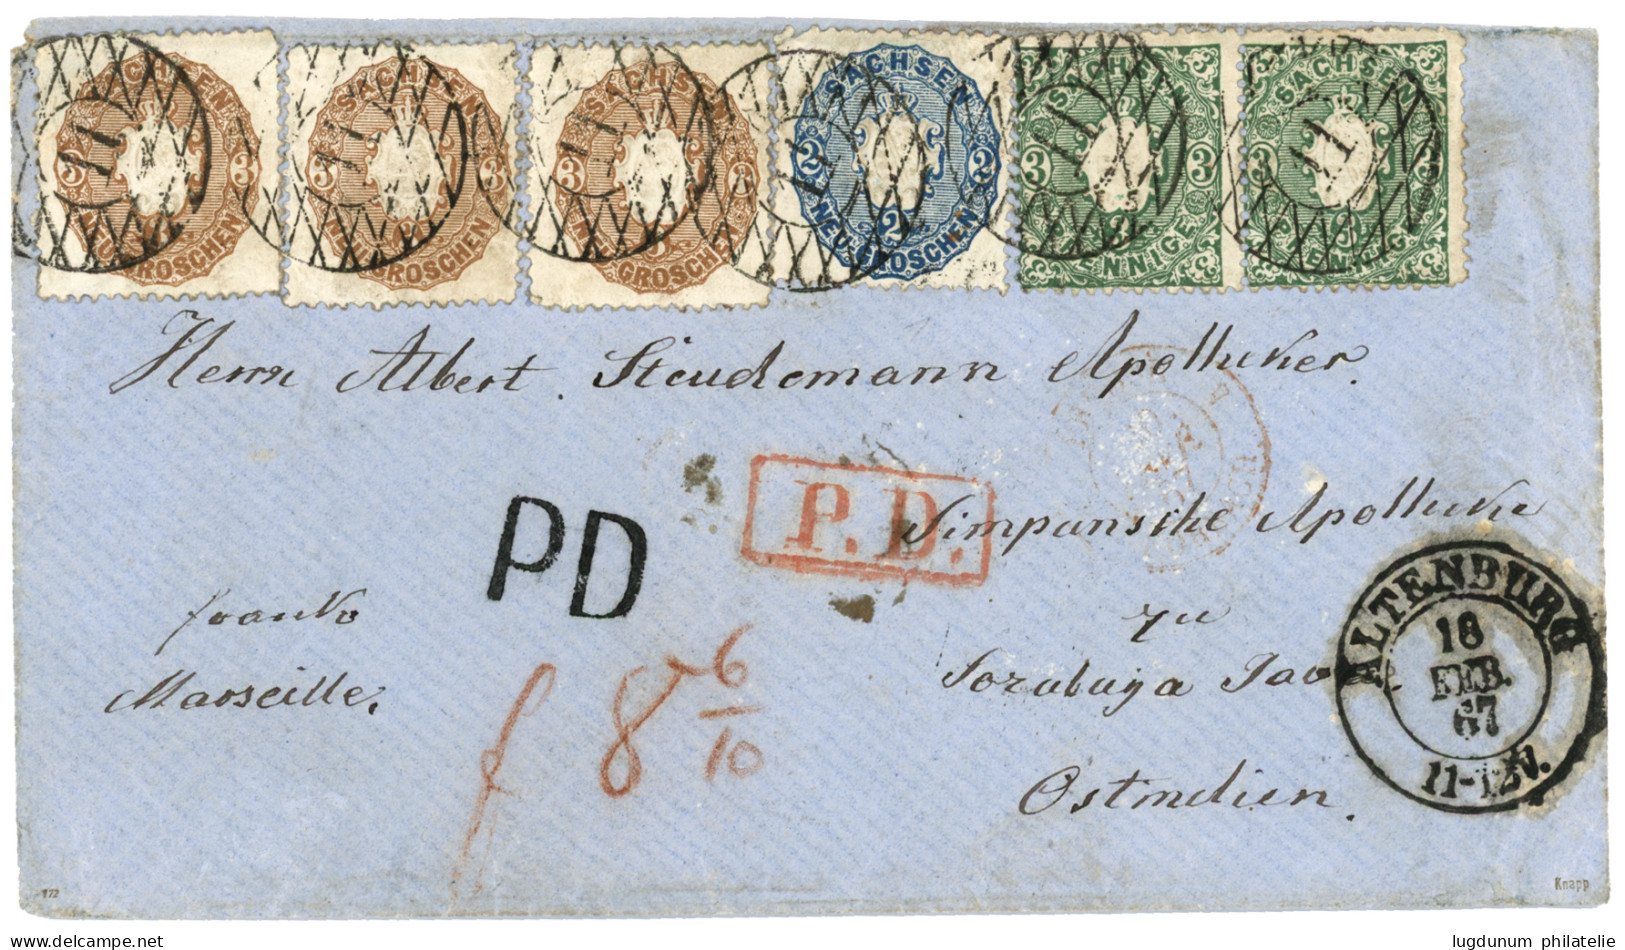 SAXONY - Destination NETHERLAND INDIES : 1867 2 Ngr + 3 Ngr (x3) + Pair 3pfg Canc. 11 + ALTENBURG On Envelope To SORABAY - Saxe